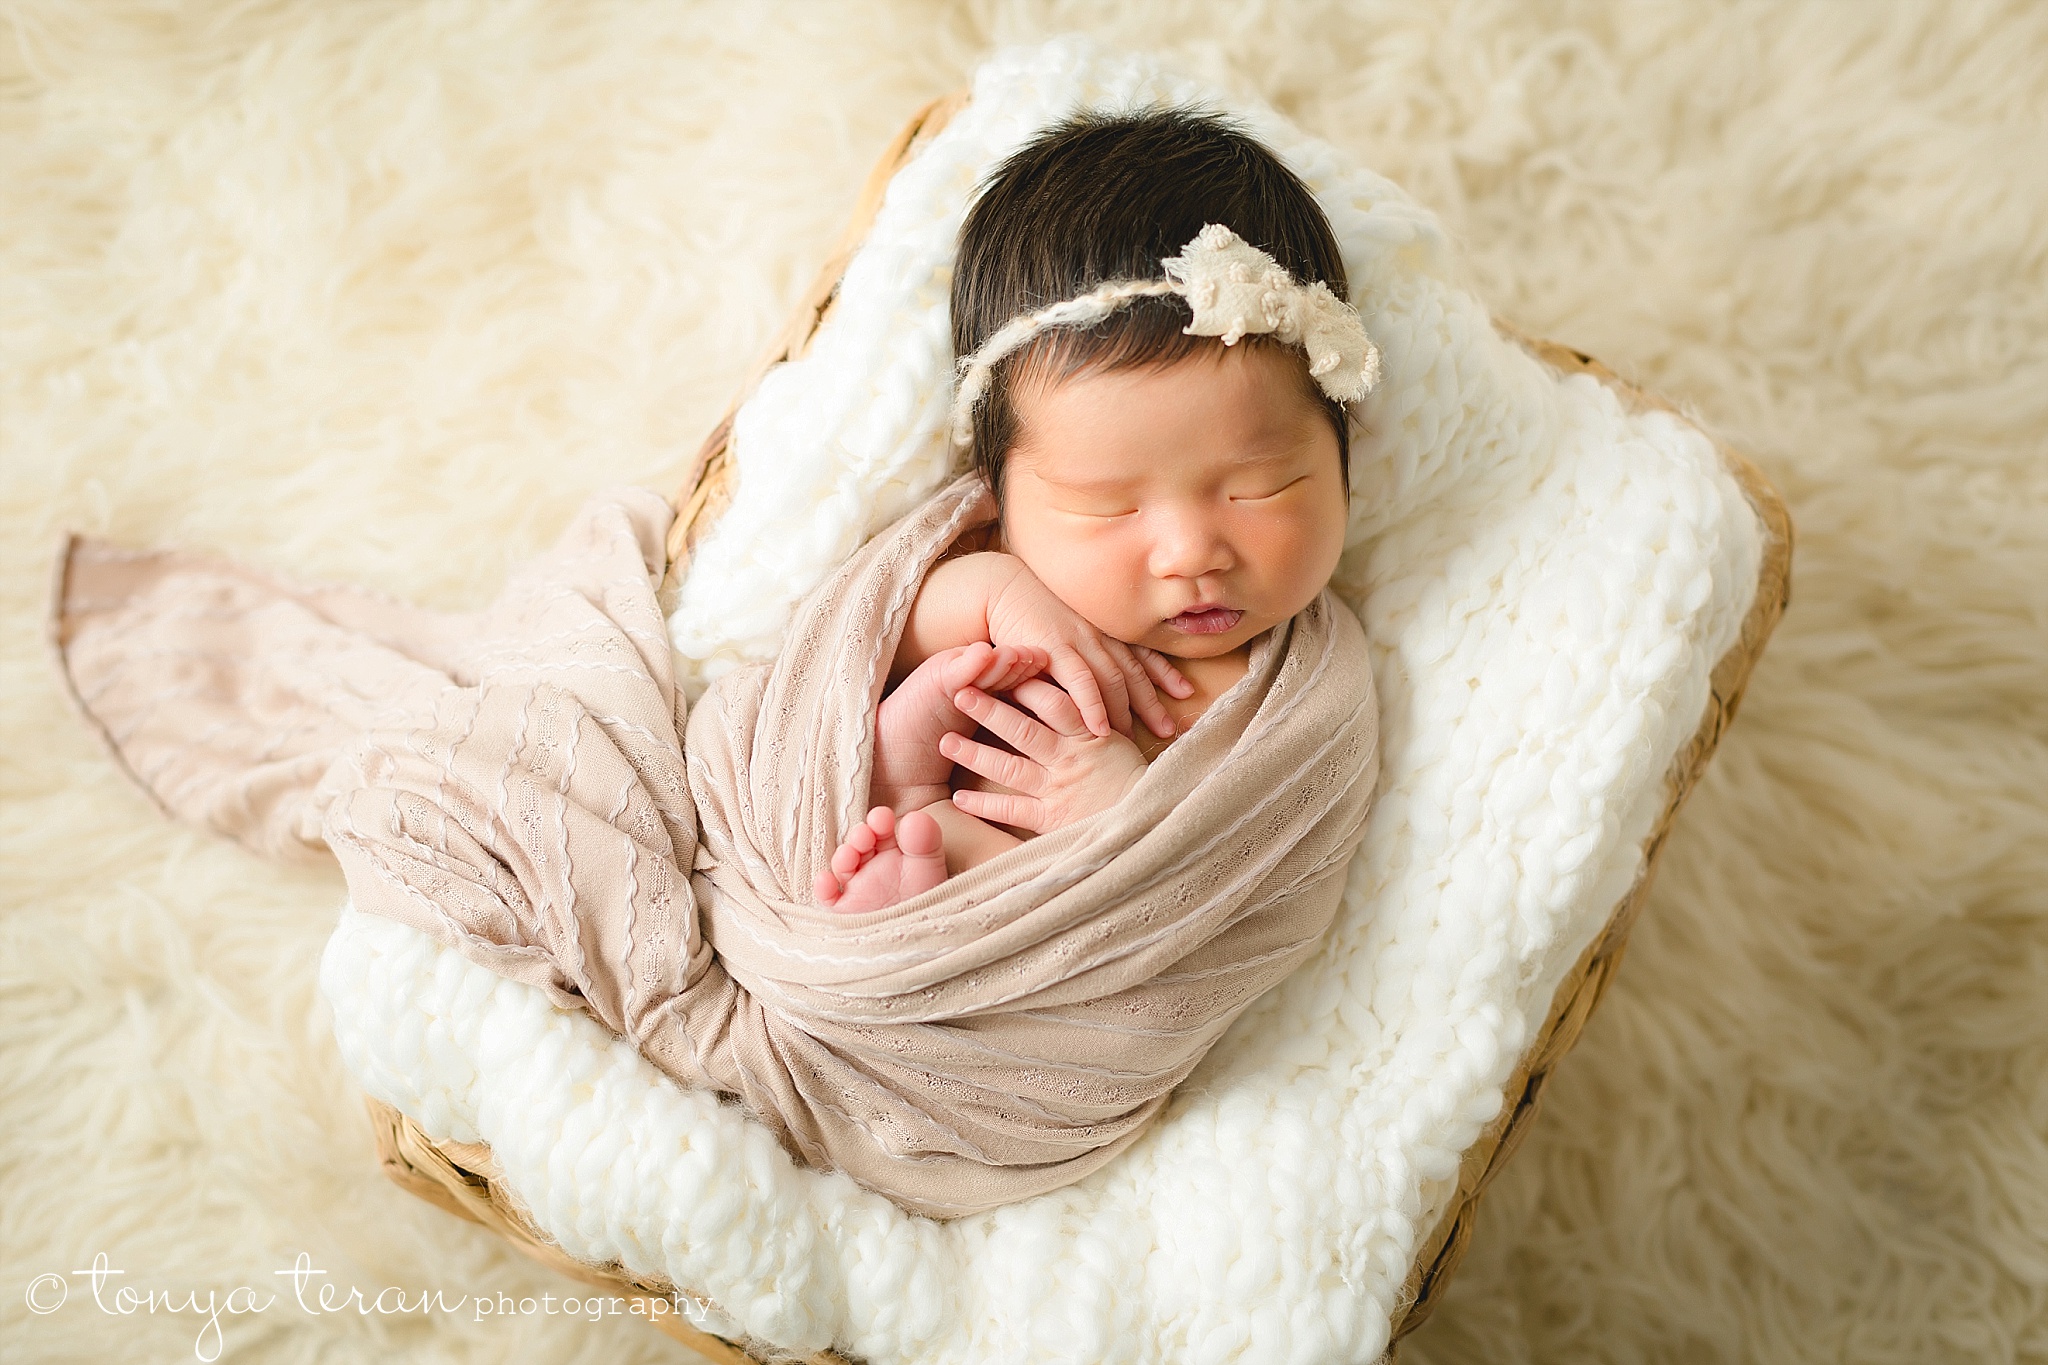 Family Newborn Photo Session | Tonya Teran Photography, Gaithersburg, MD Newborn, Baby, and Family Photographer